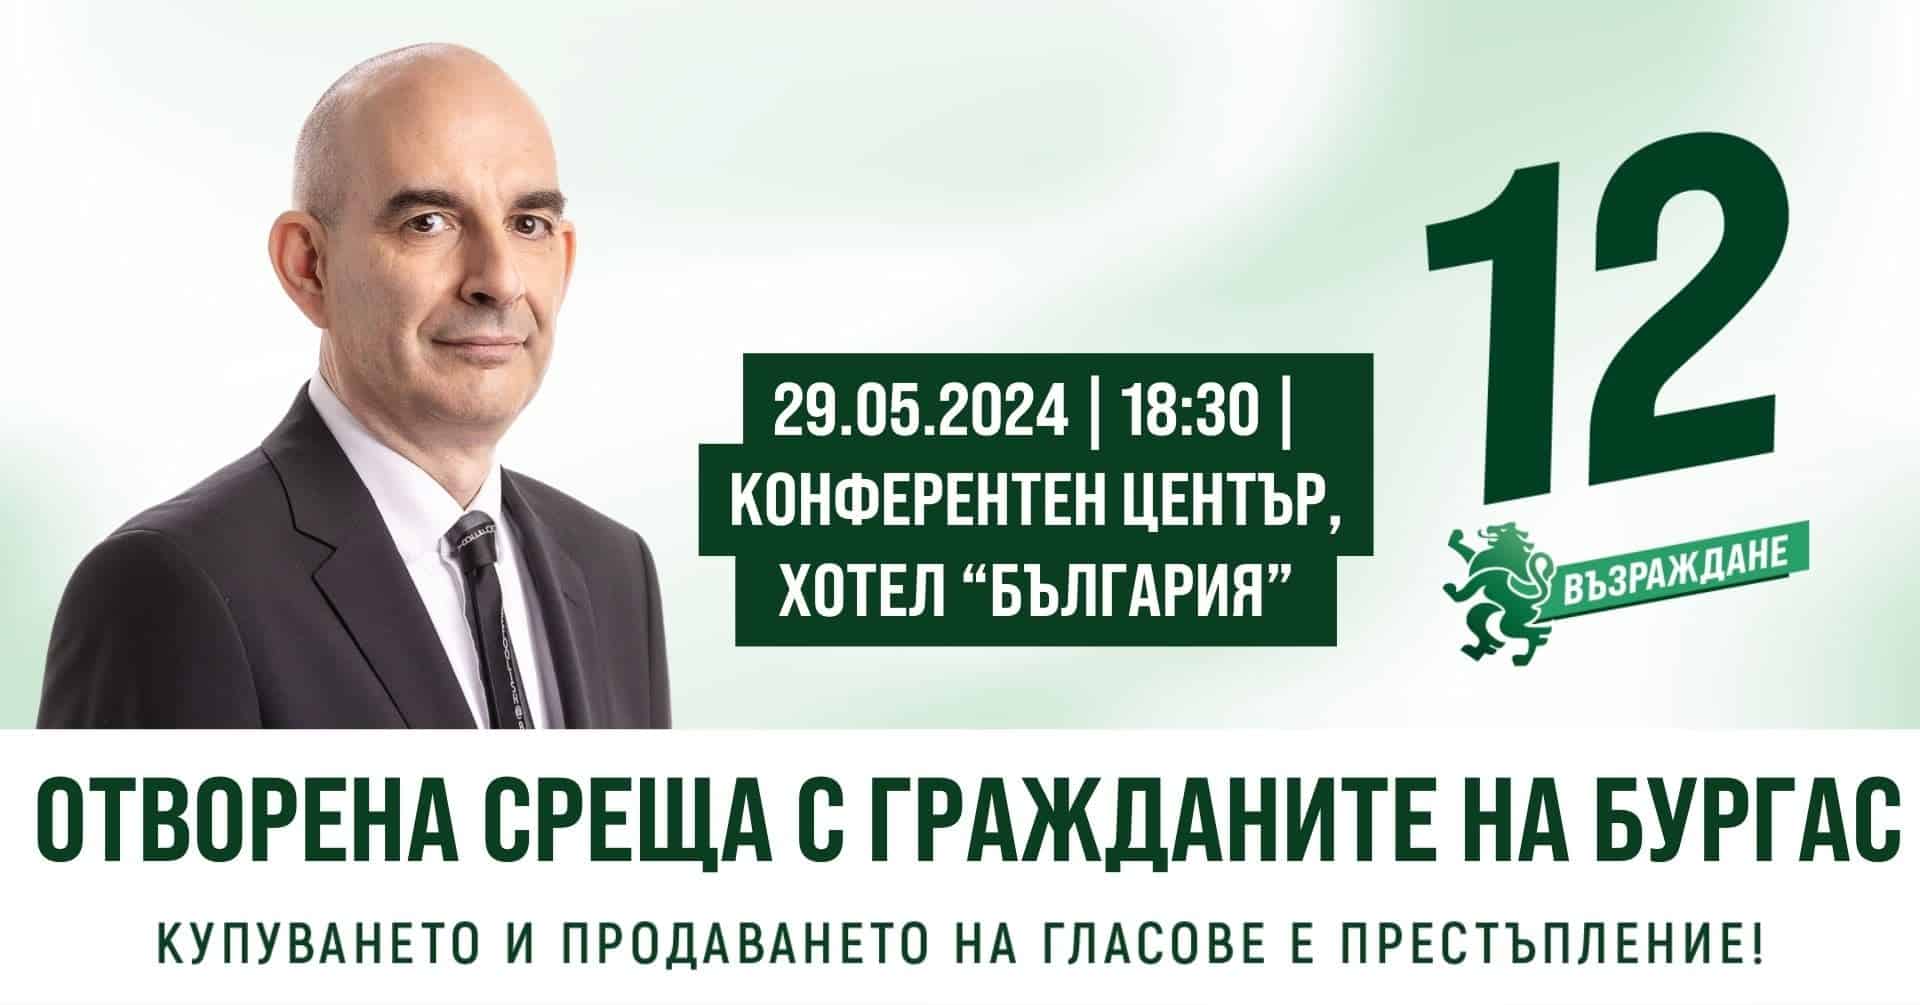 ПП Възраждане организира среща между гражданите на Бургас и кандидата